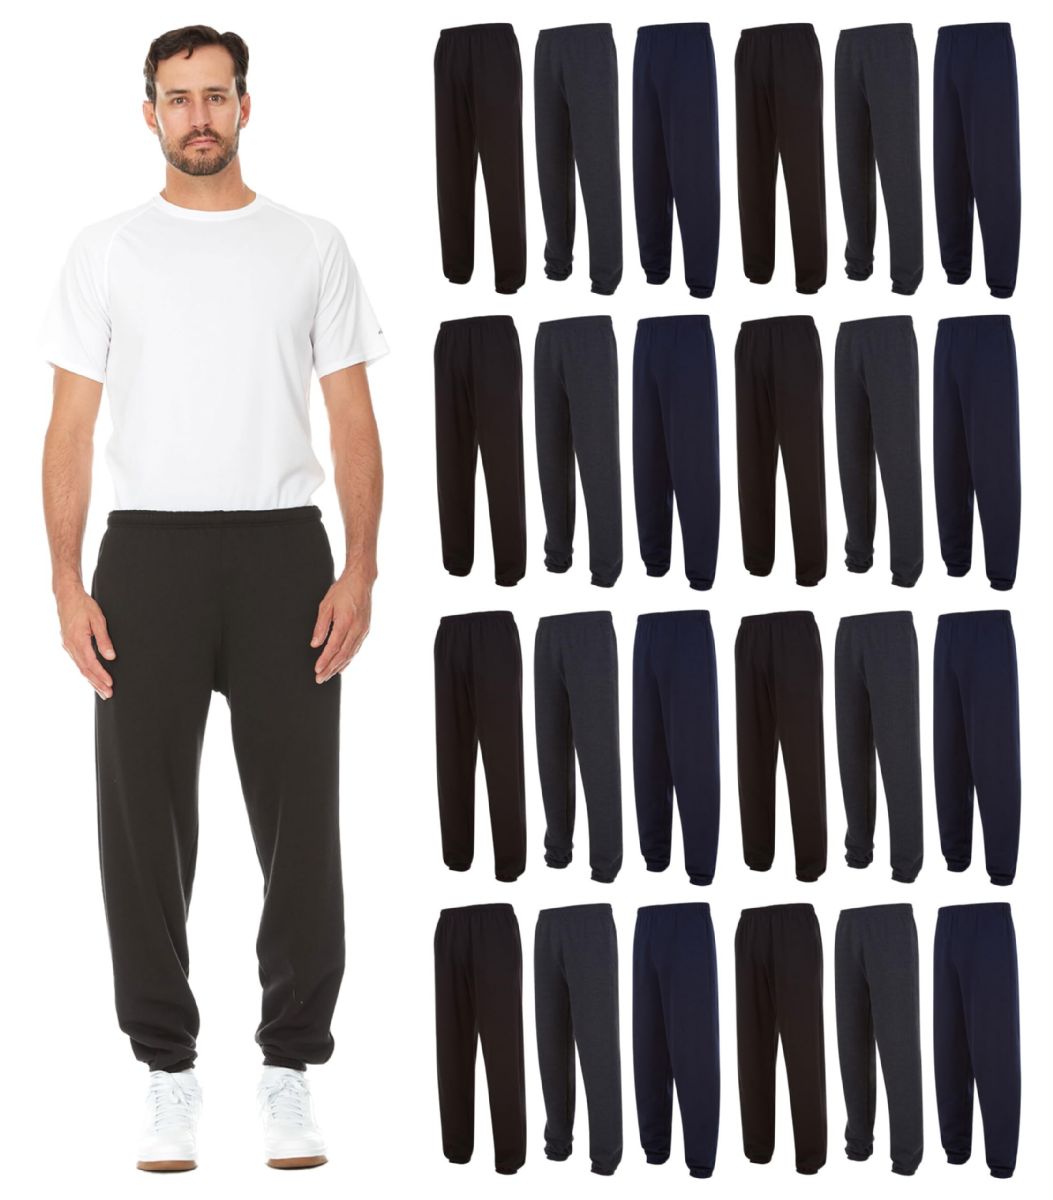 24 Pieces of Men's Assorted Navy Gray Black Sweatpants Joggers Size Medium